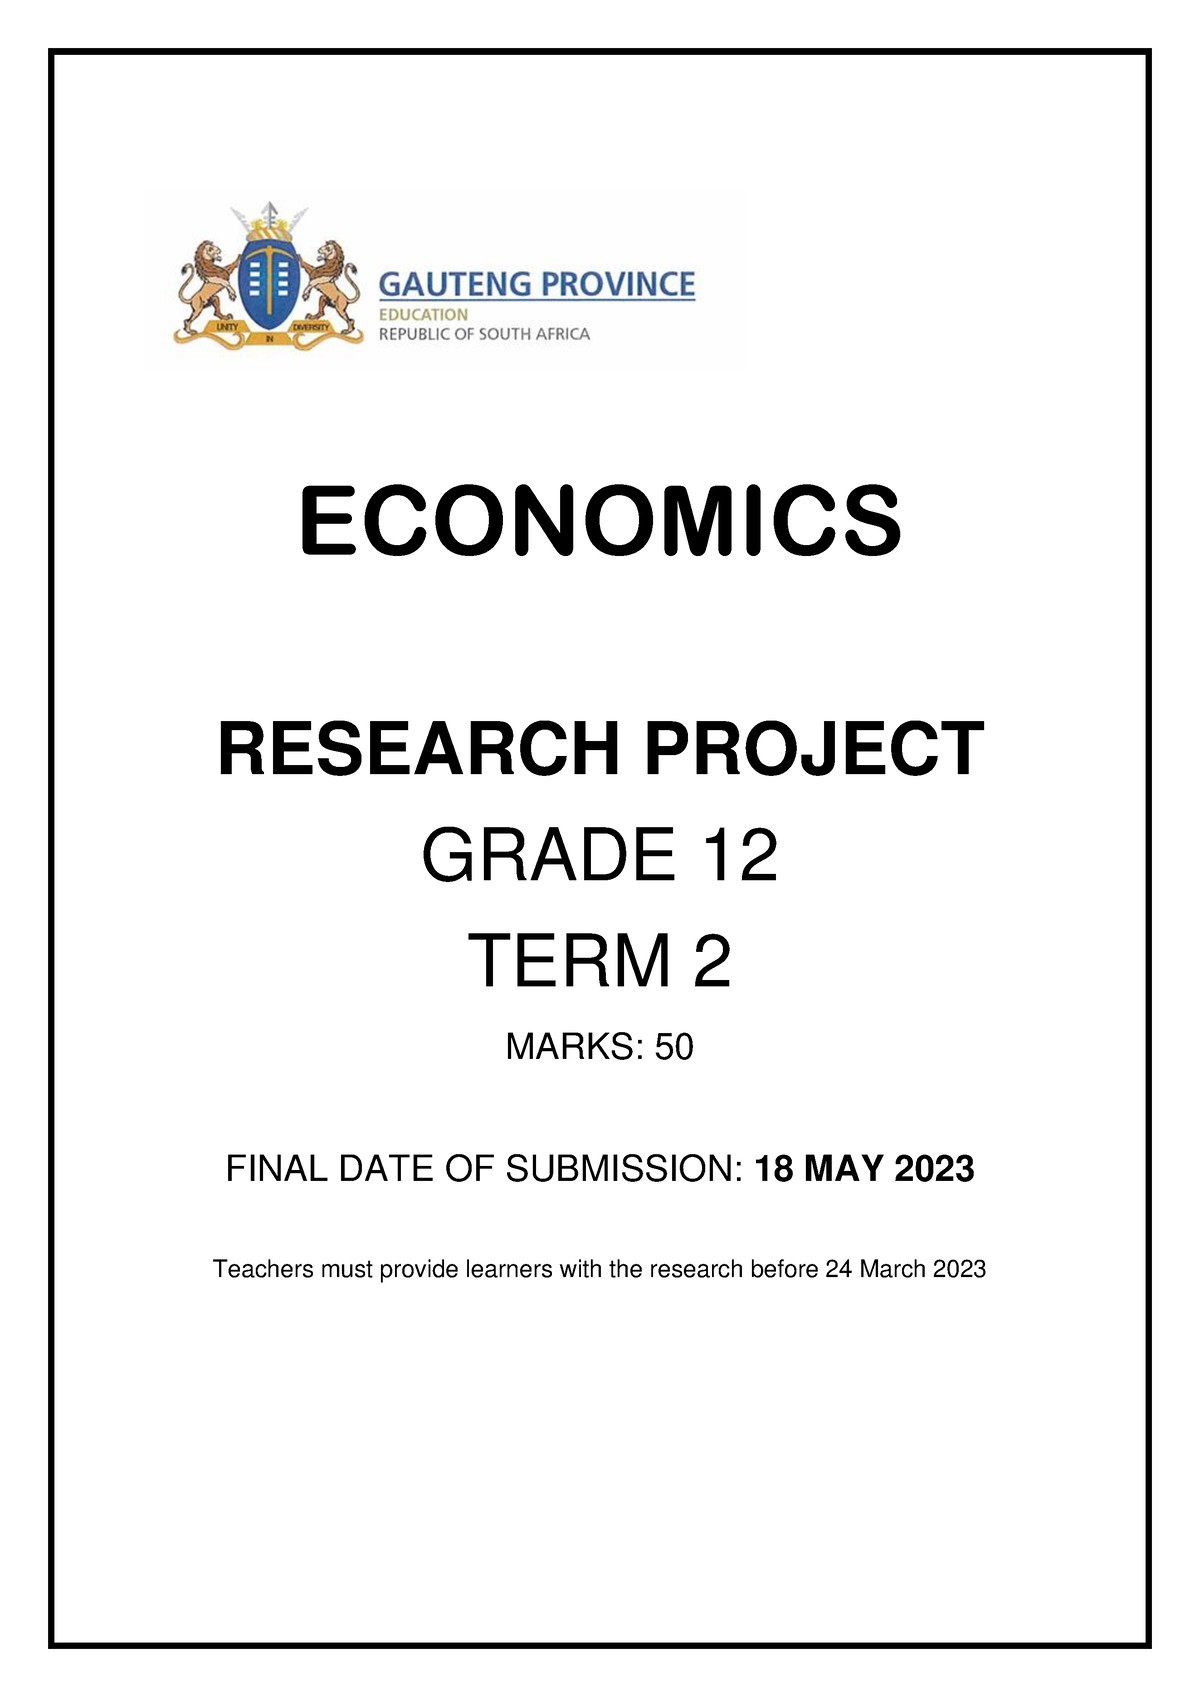 economics research project 2023 grade 12 term 2 gauteng